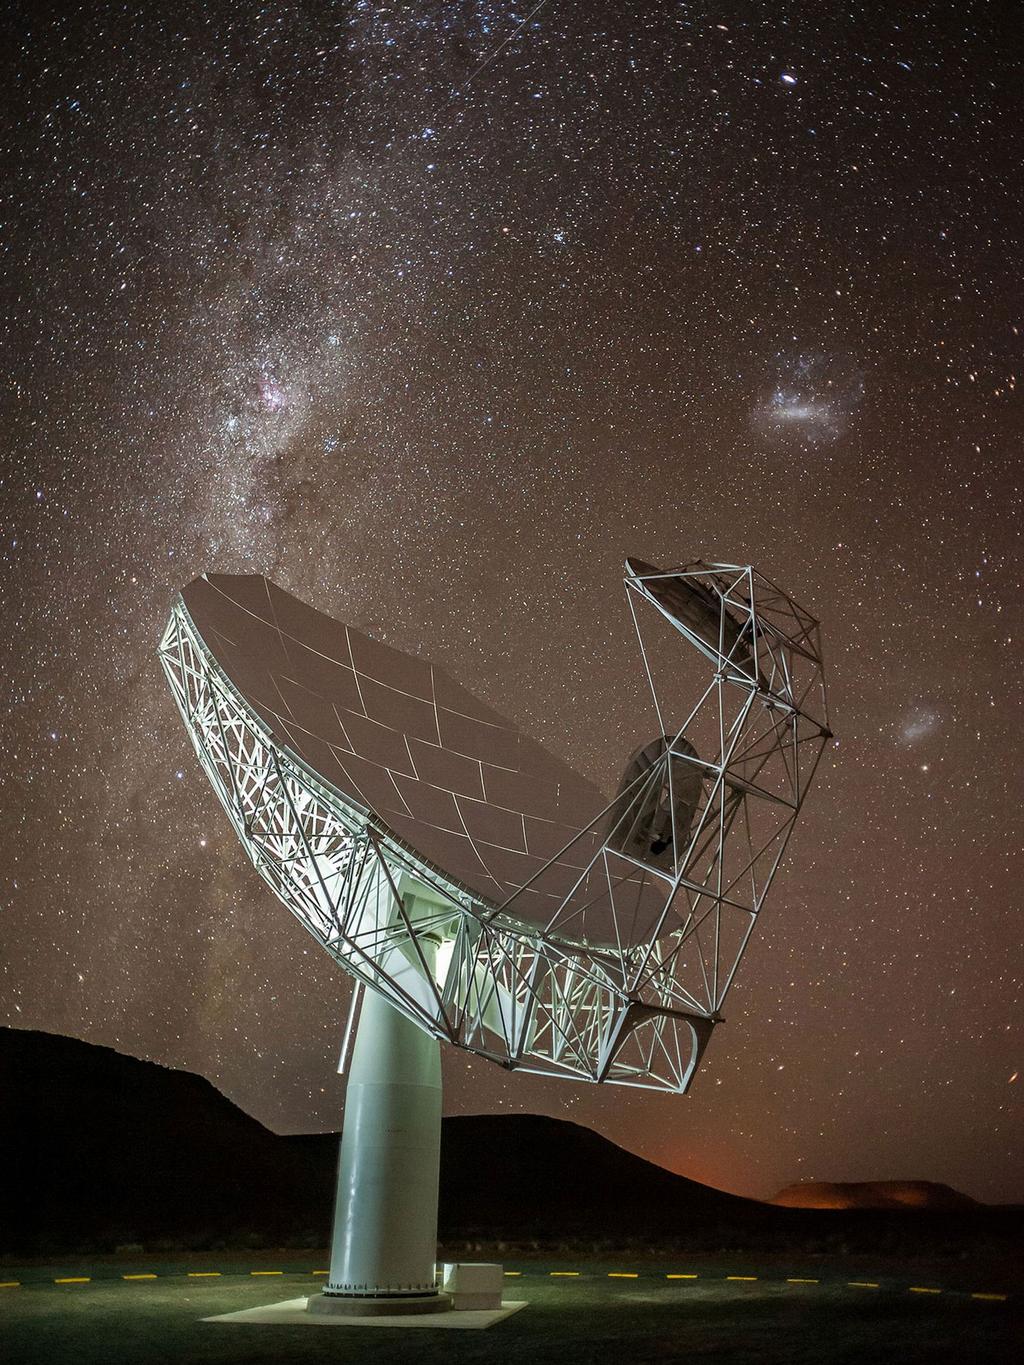 MeerKAT The Bigger Karoo Array Telescope South Africa 64 antennas, 13.